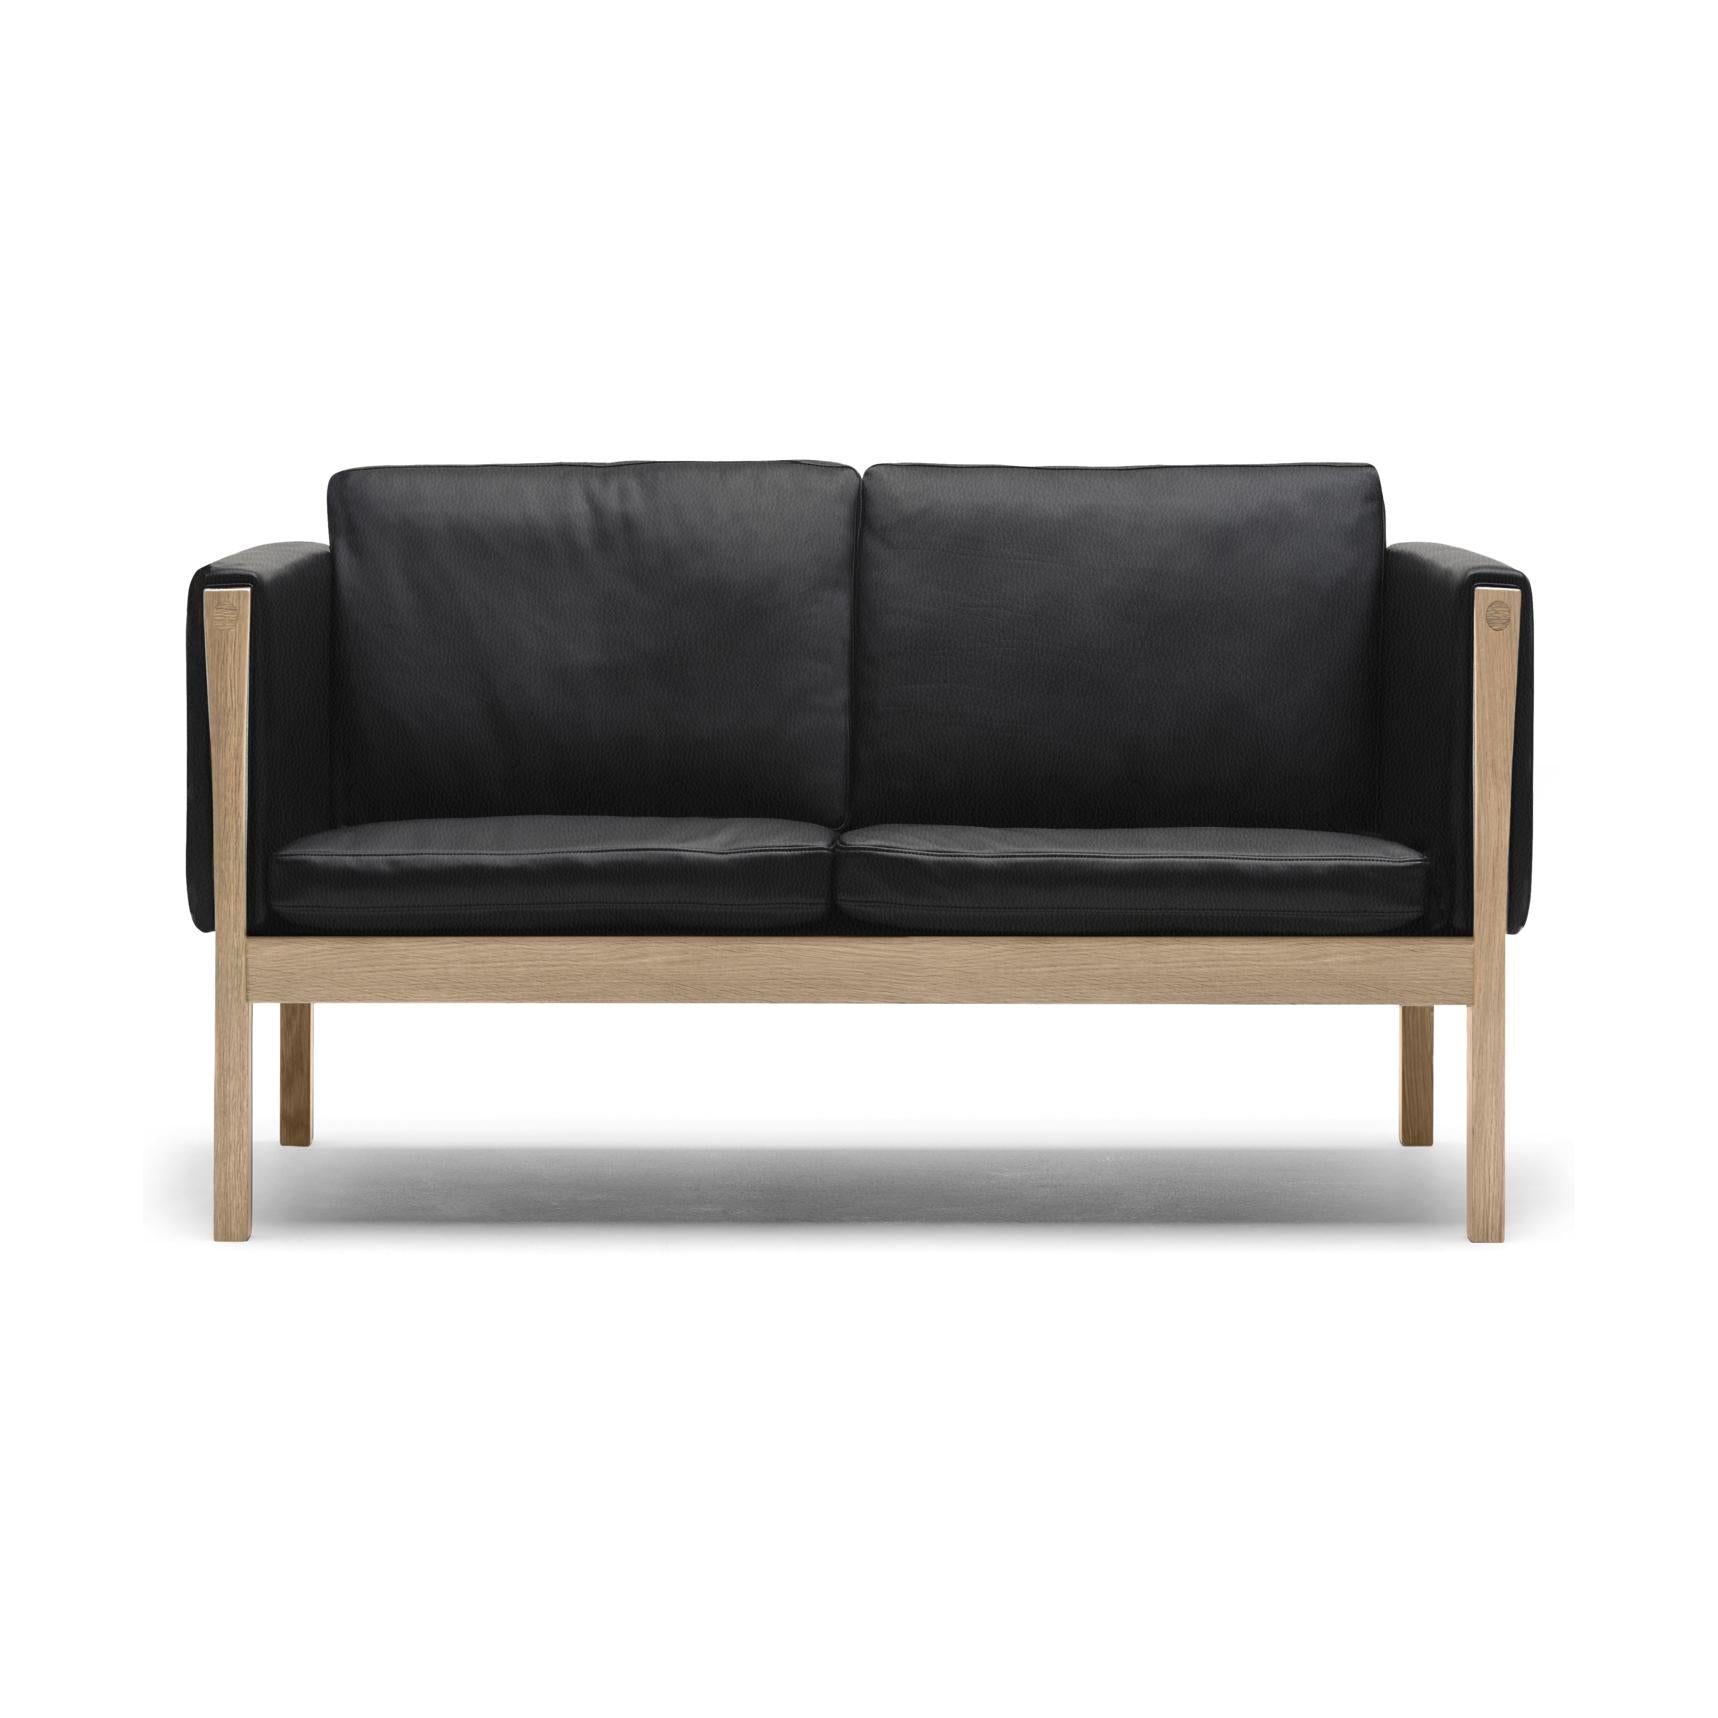 Carl Hansen CH162 soffa, oljat ek/svart läder